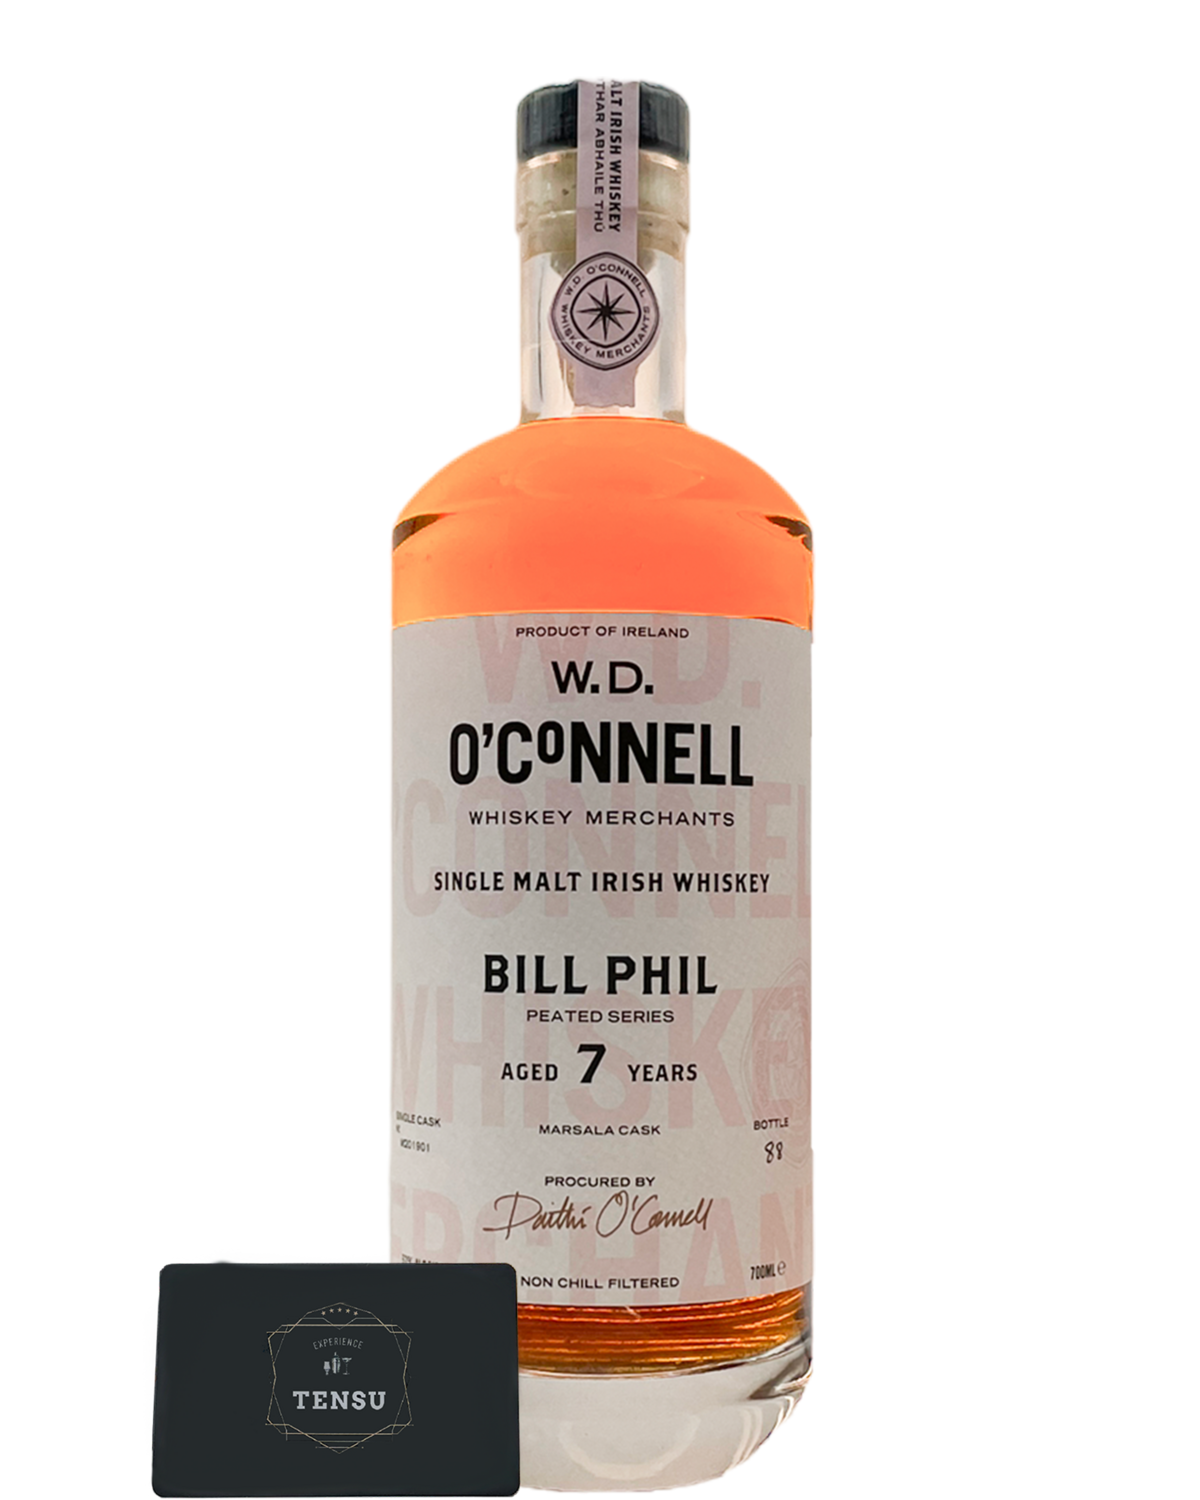 W.D. O' Connell Bill Phil 7Y (2013-2023) Peated Series Marsala 53.0 "OCWM"